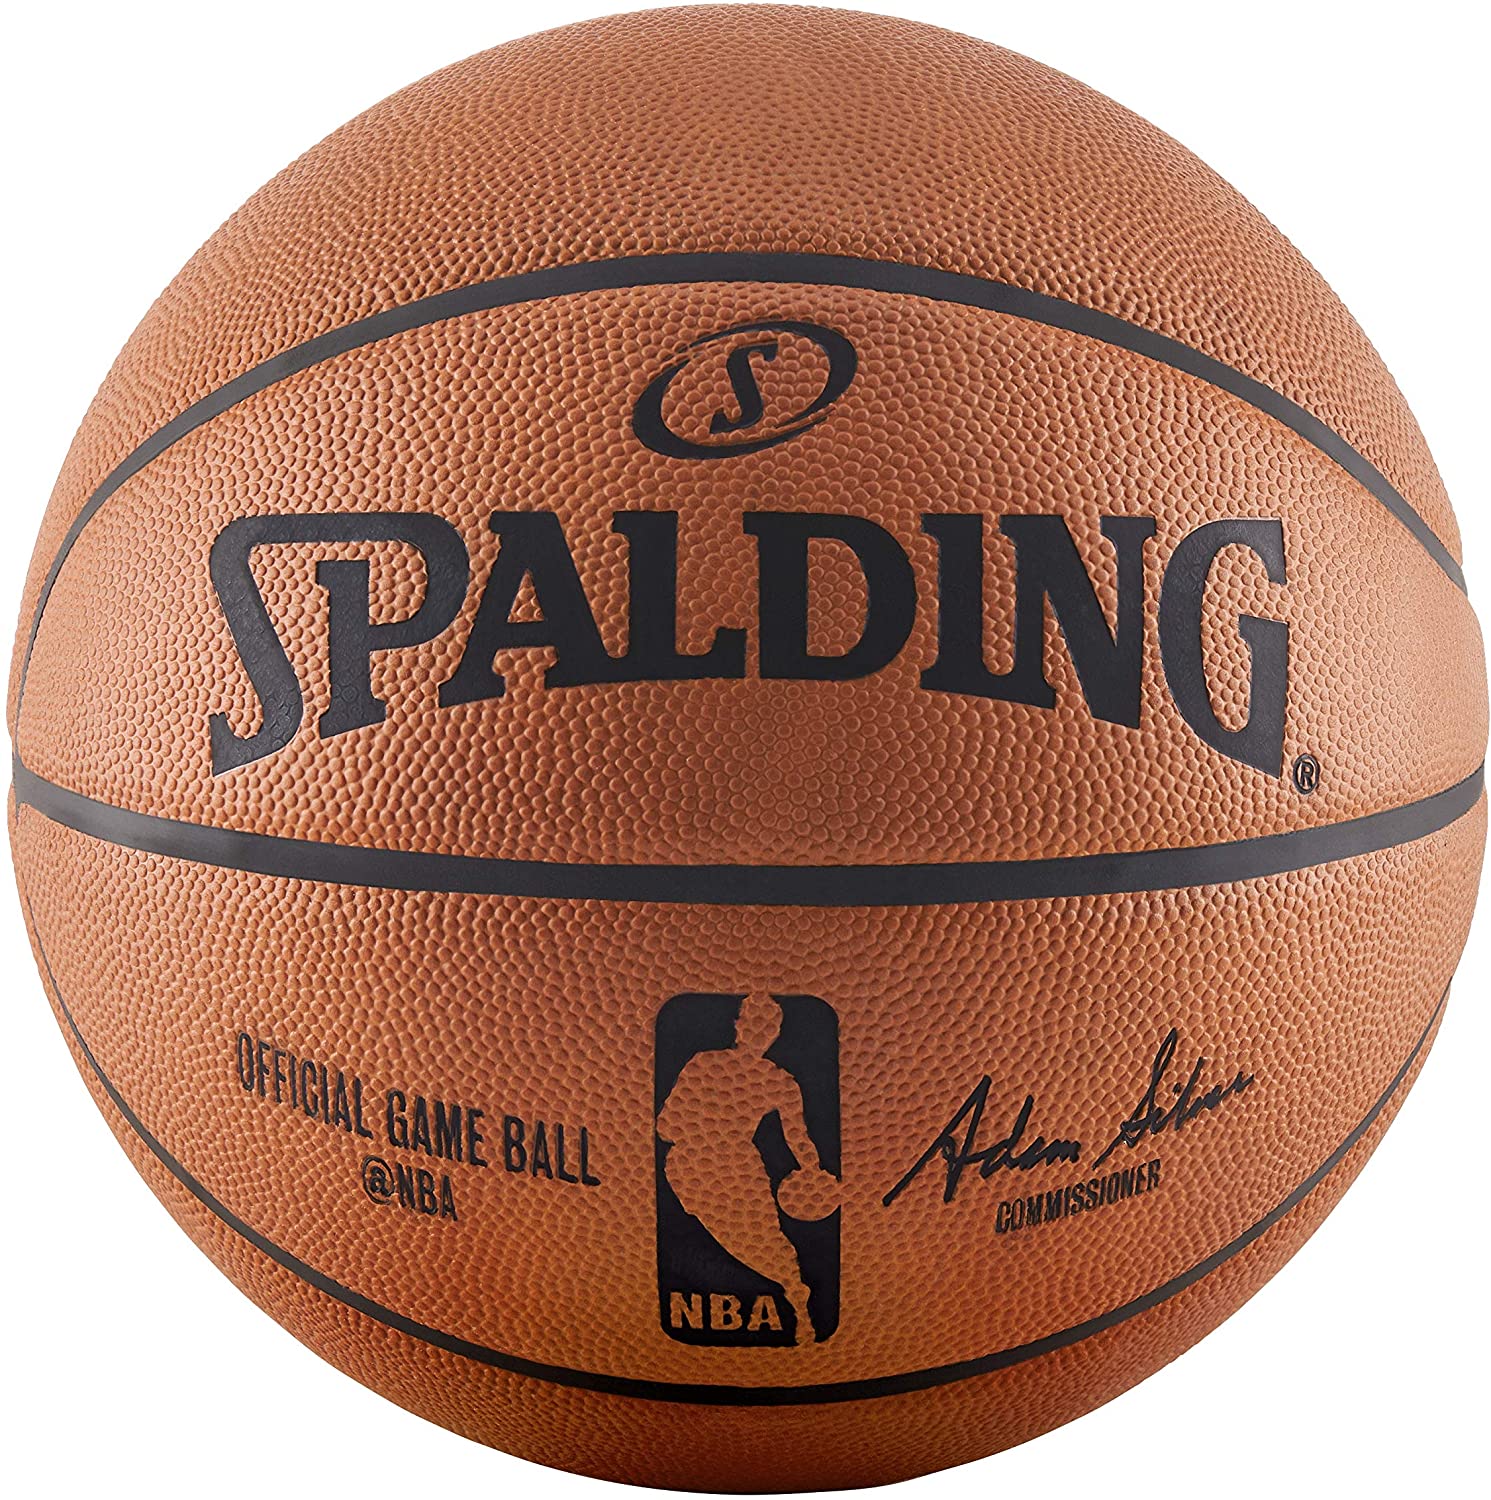 Spalding NBA Official Game Ball Orange